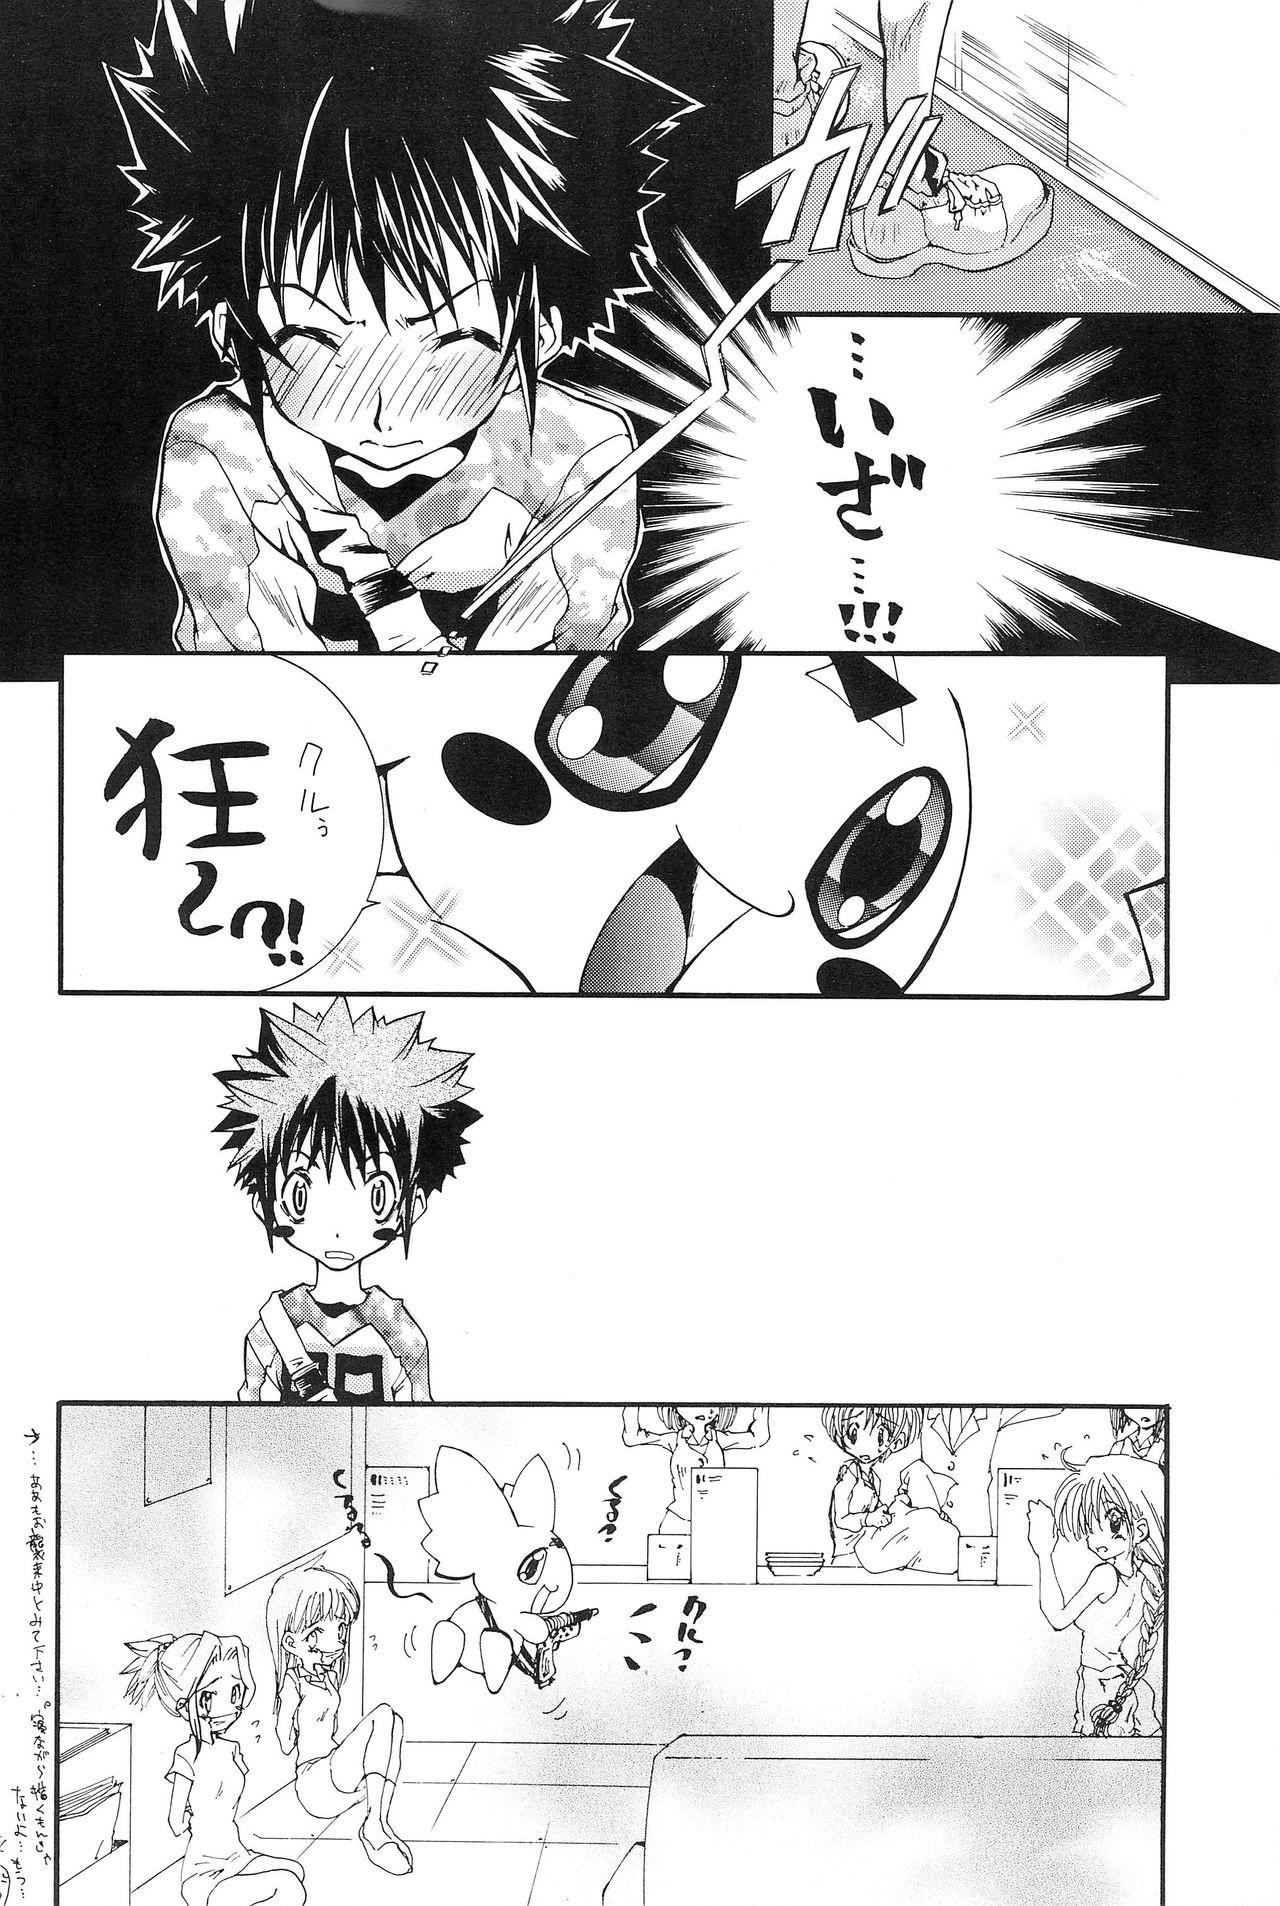 Tetas DUMMY - Digimon Yanks Featured - Page 10